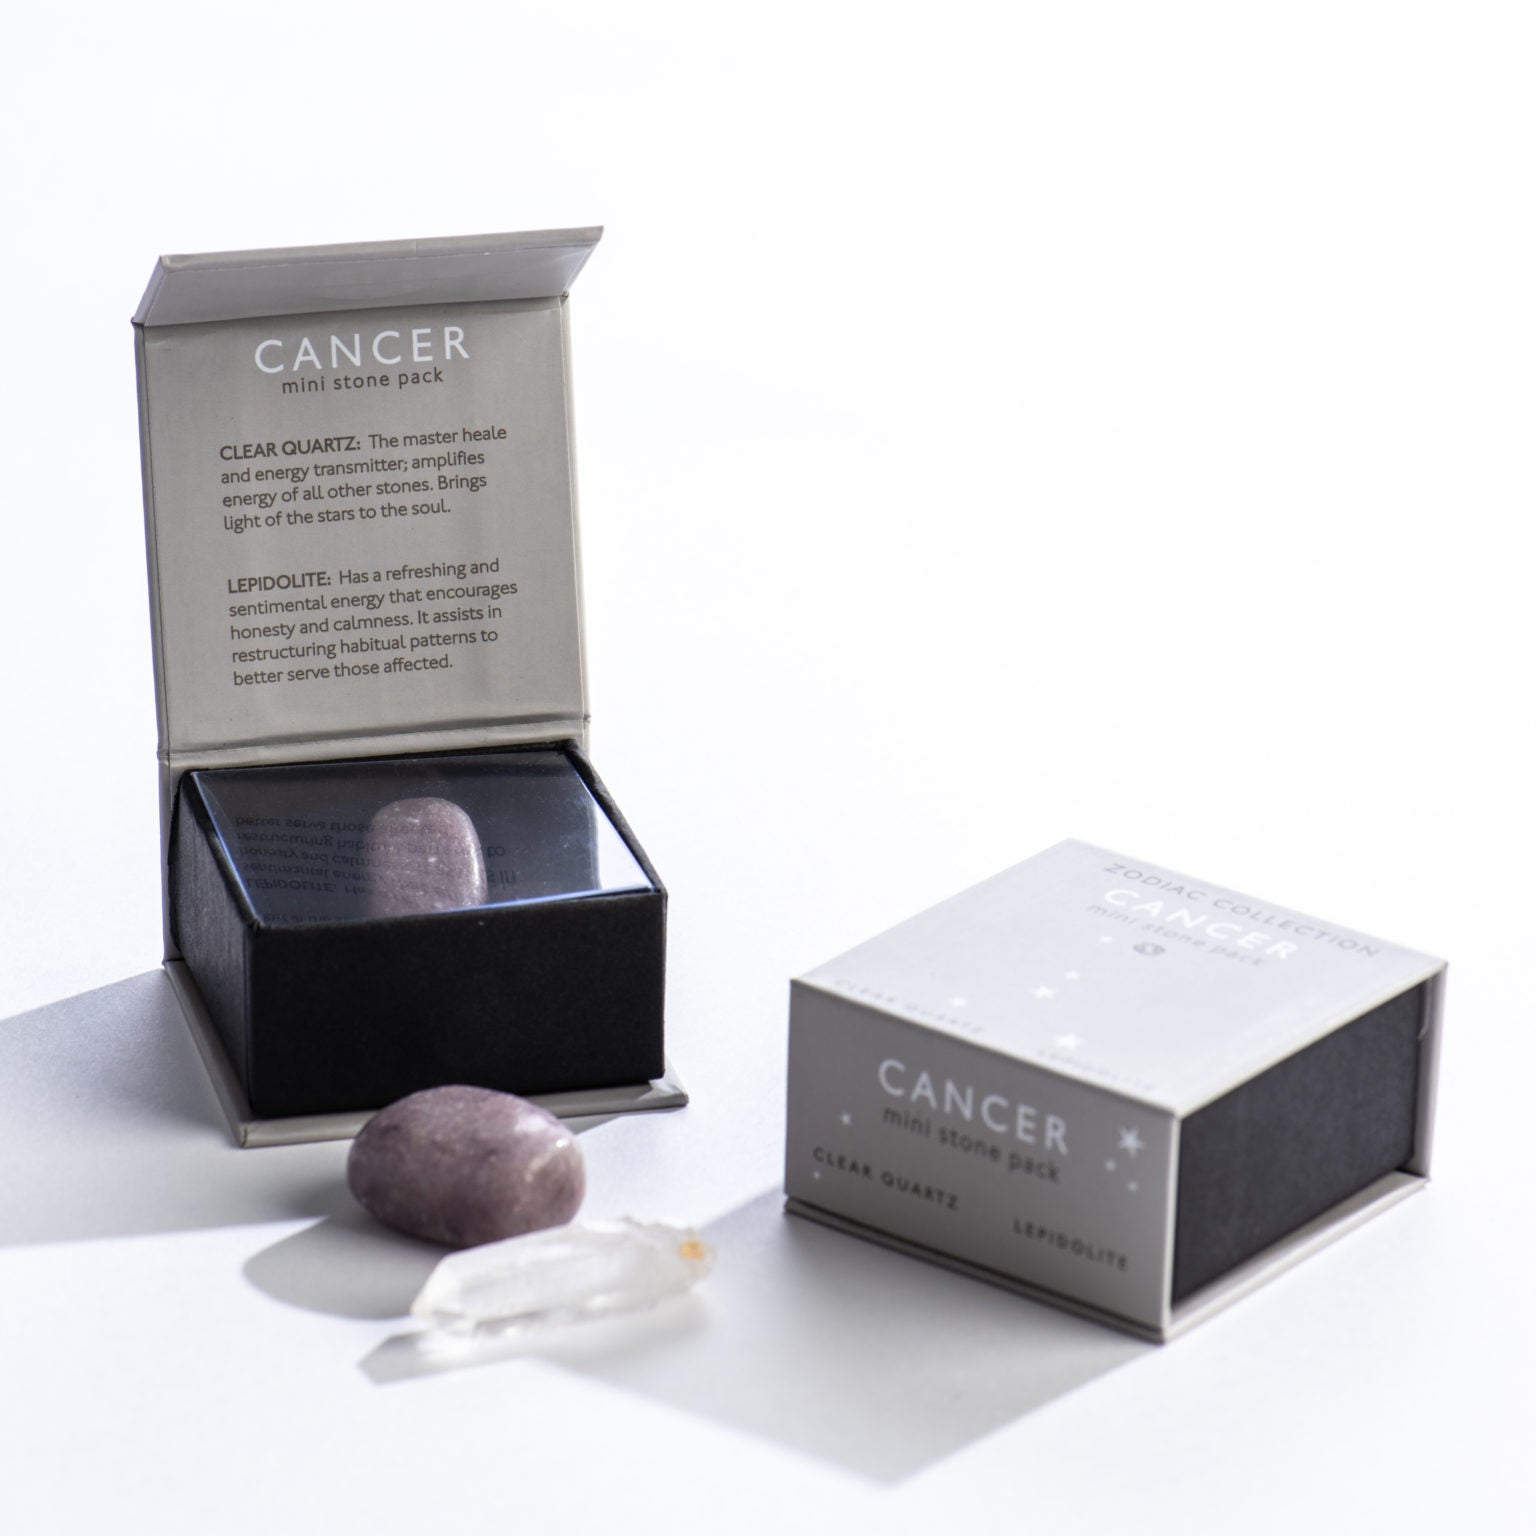 Zodiac Mini Stone Pack: Cancer